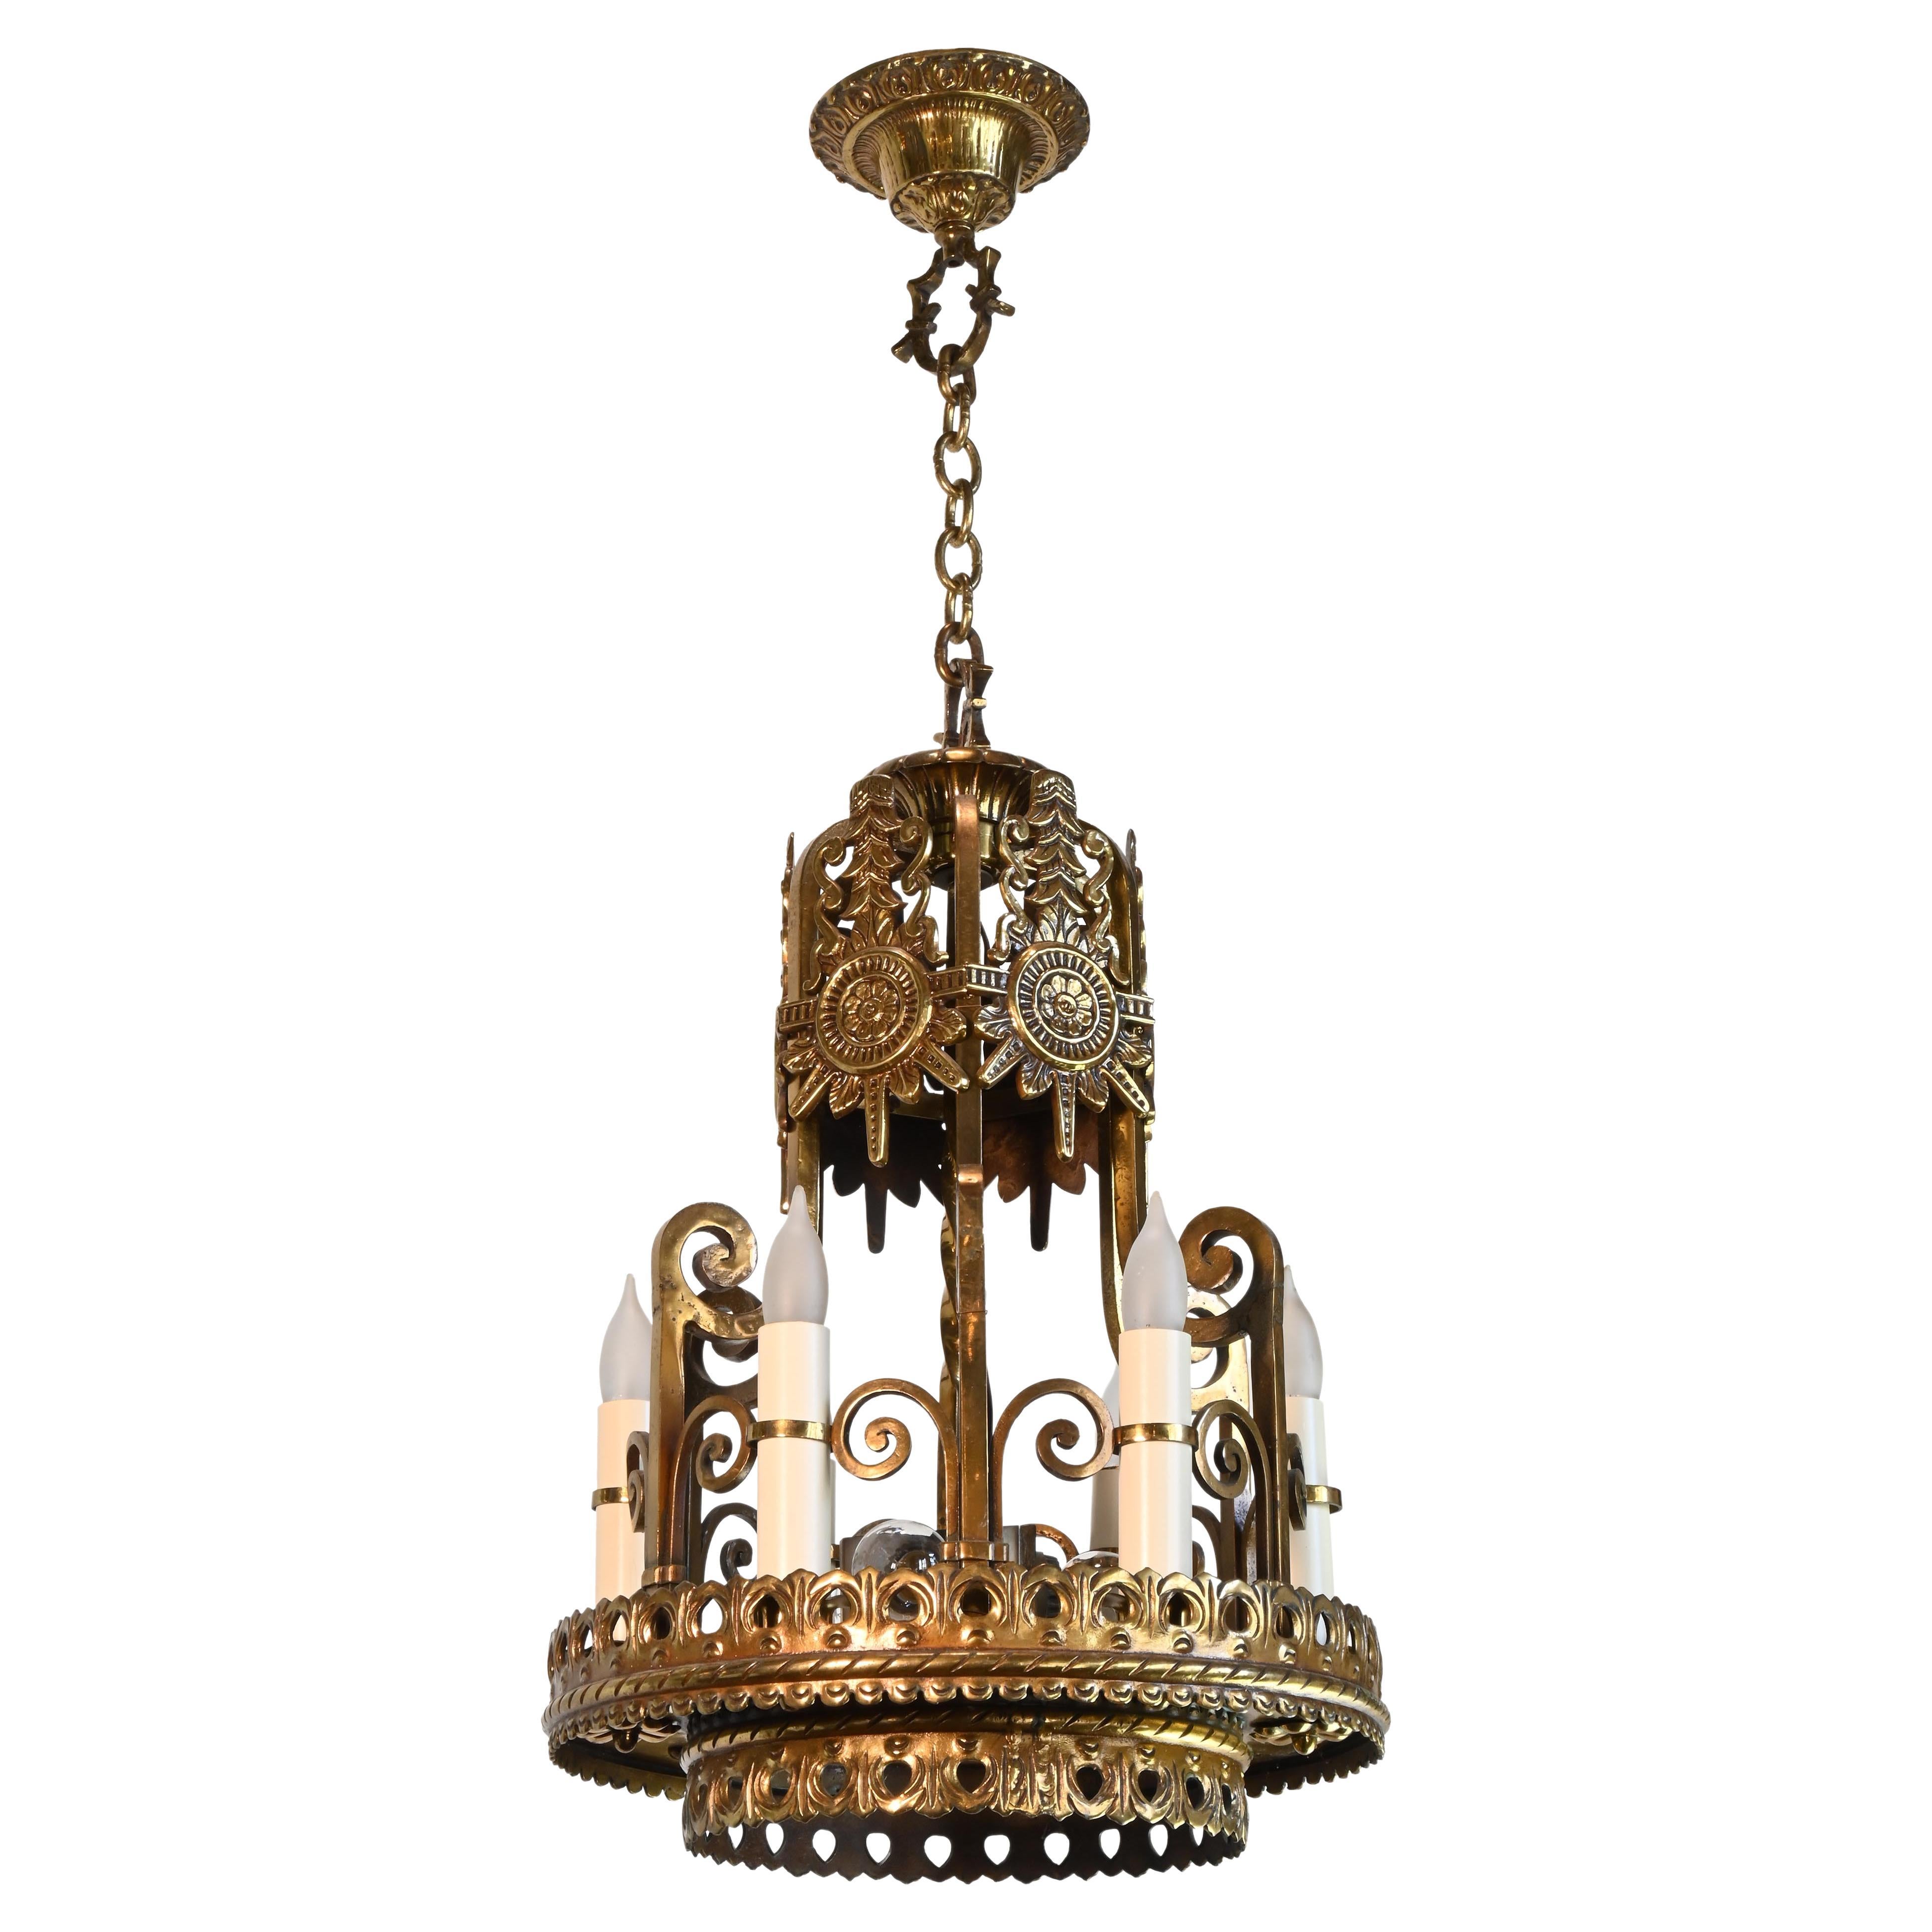 Spanish Baroque/Tudor Revival Brass Chandelier For Sale